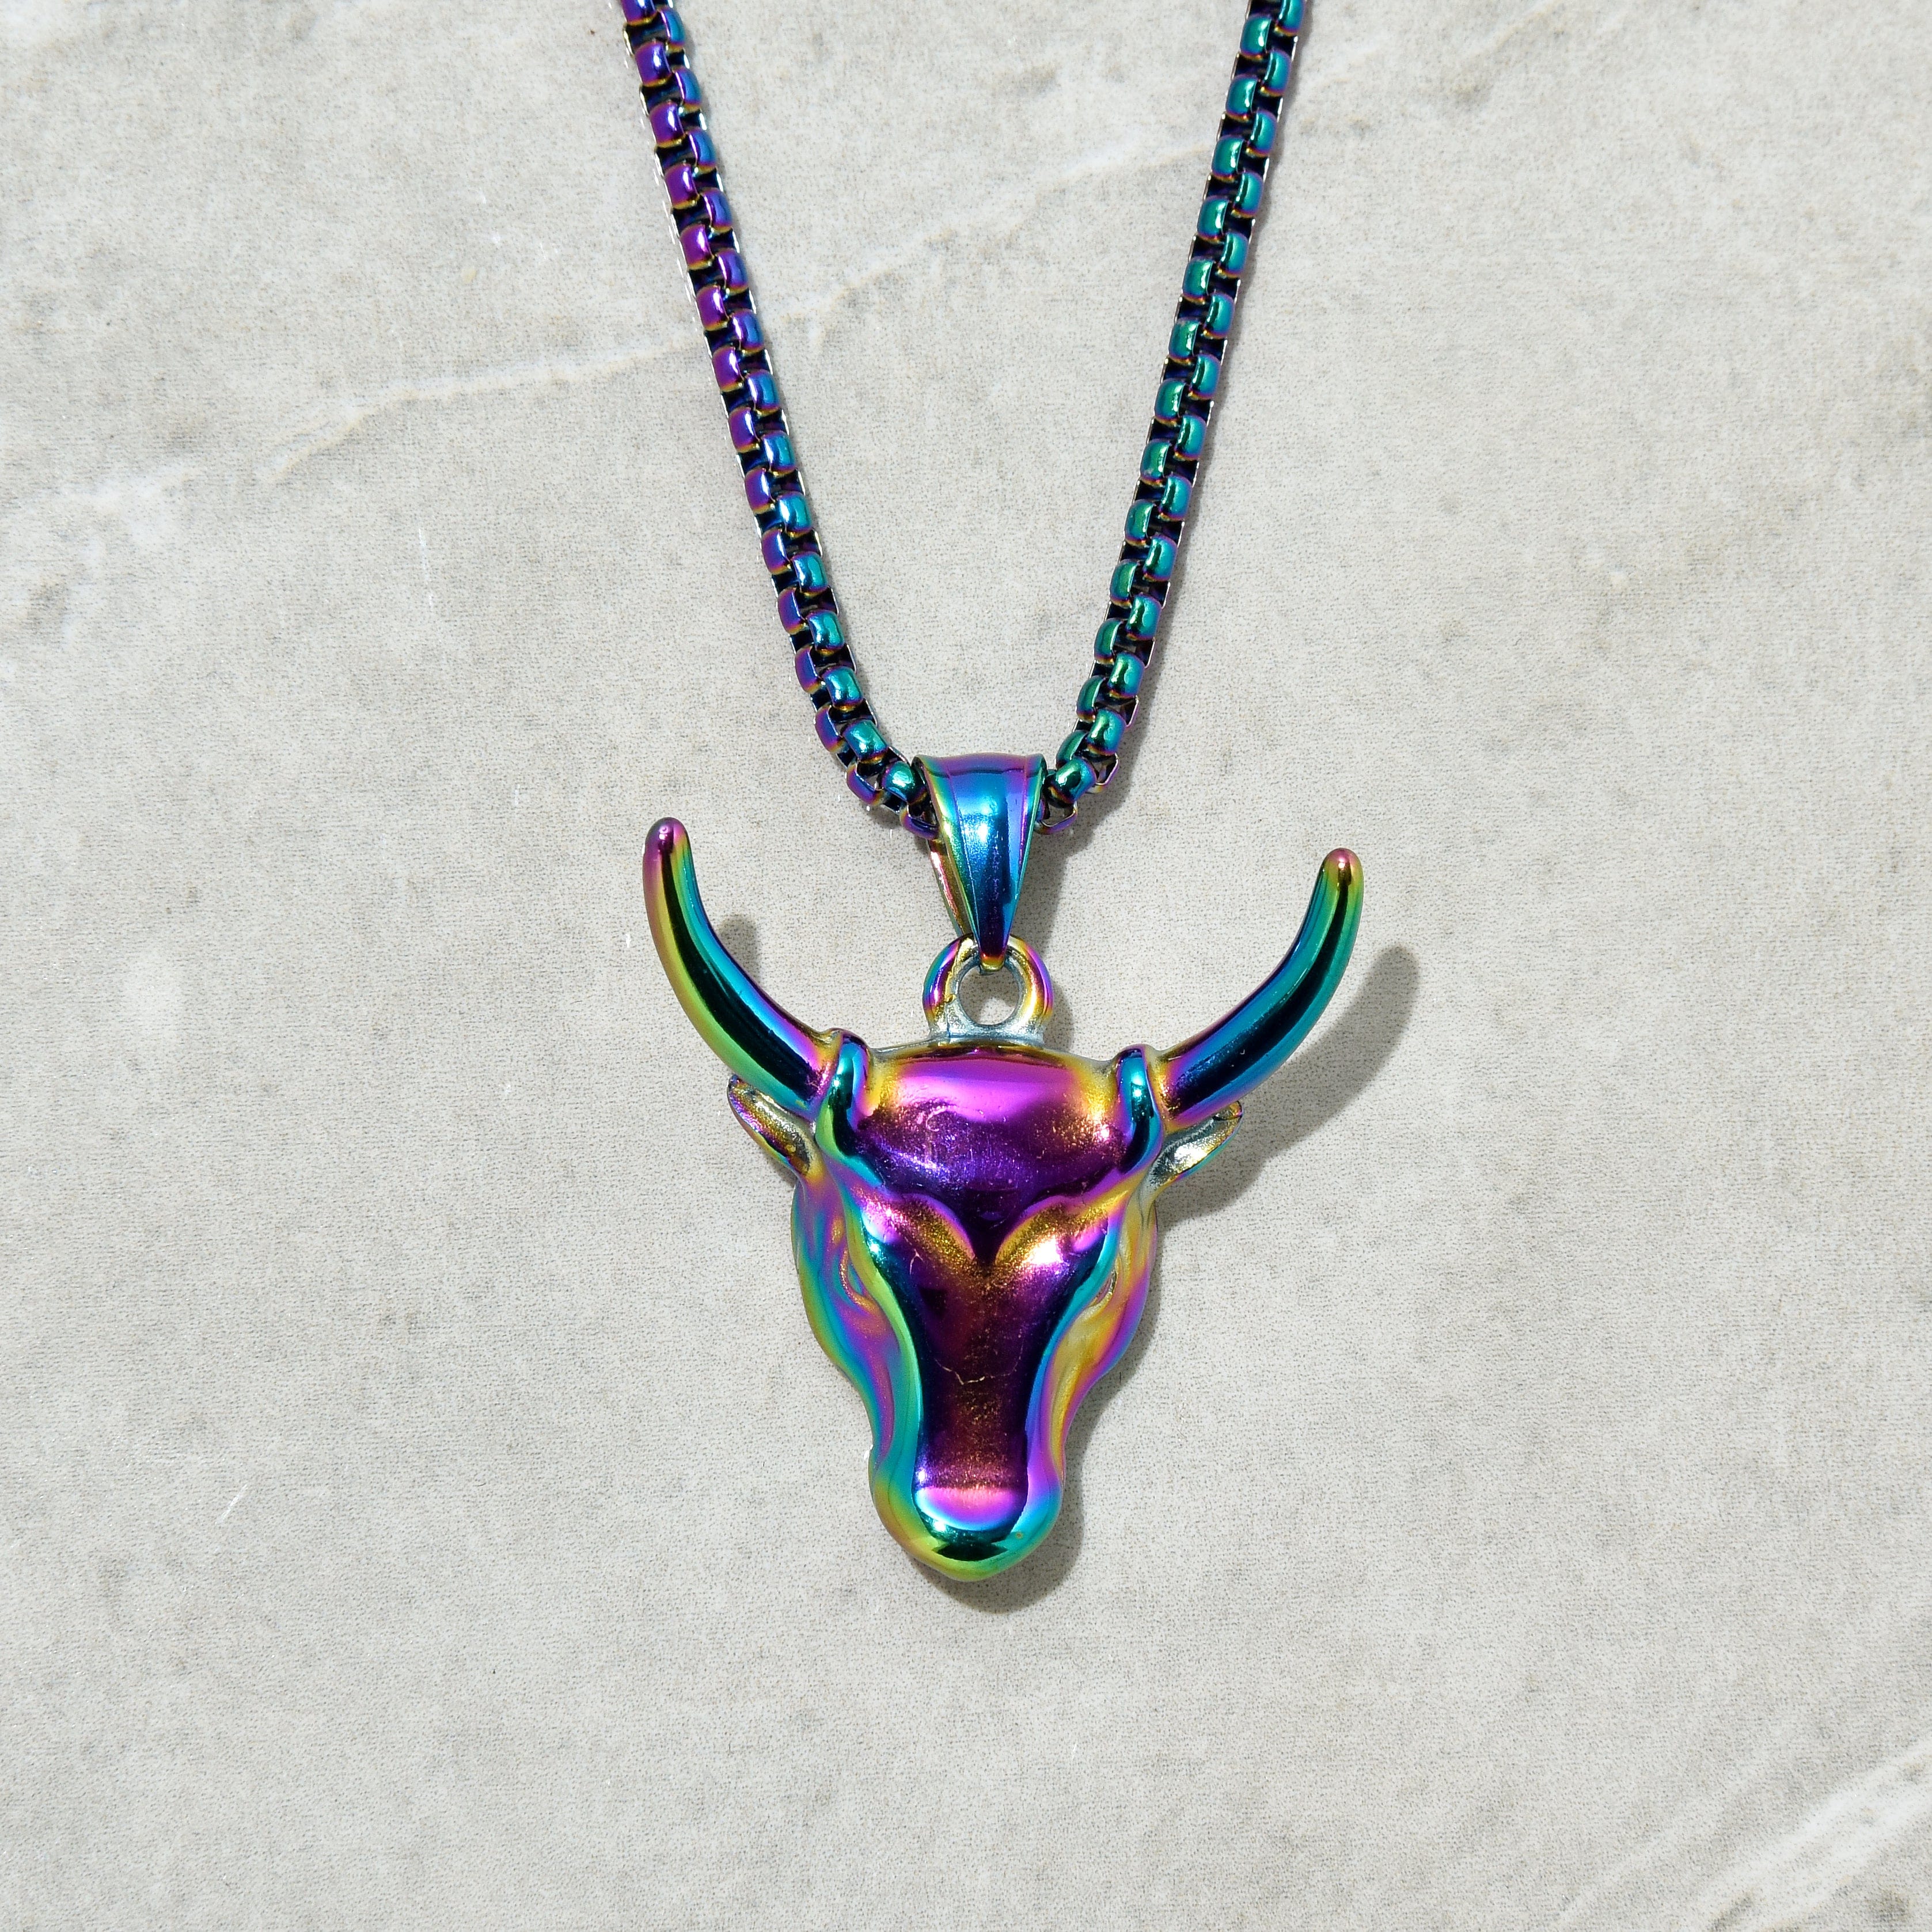 Kalifano Steel Hearts Jewelry Aurora Borealis Bull Head Steel Hearts Necklace SHN517-AB